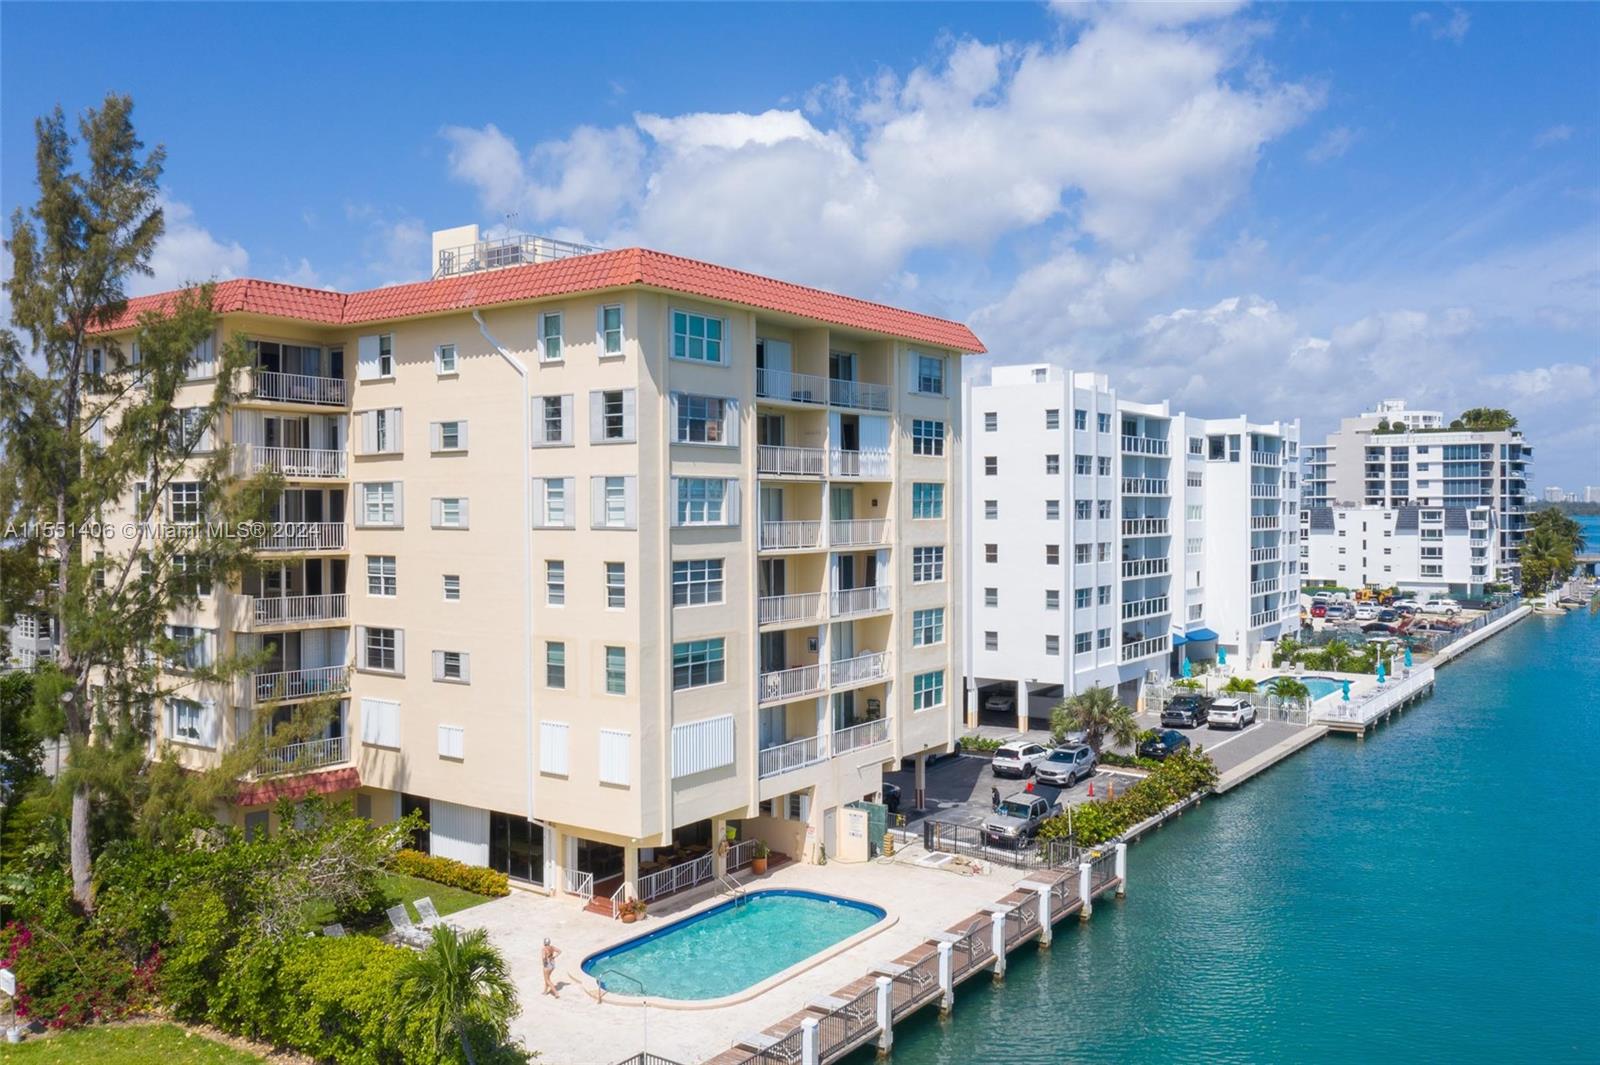 Property for Sale at 9341 E Bay Harbor Dr Ph D, Bay Harbor Islands, Miami-Dade County, Florida - Bedrooms: 2 
Bathrooms: 3  - $680,000